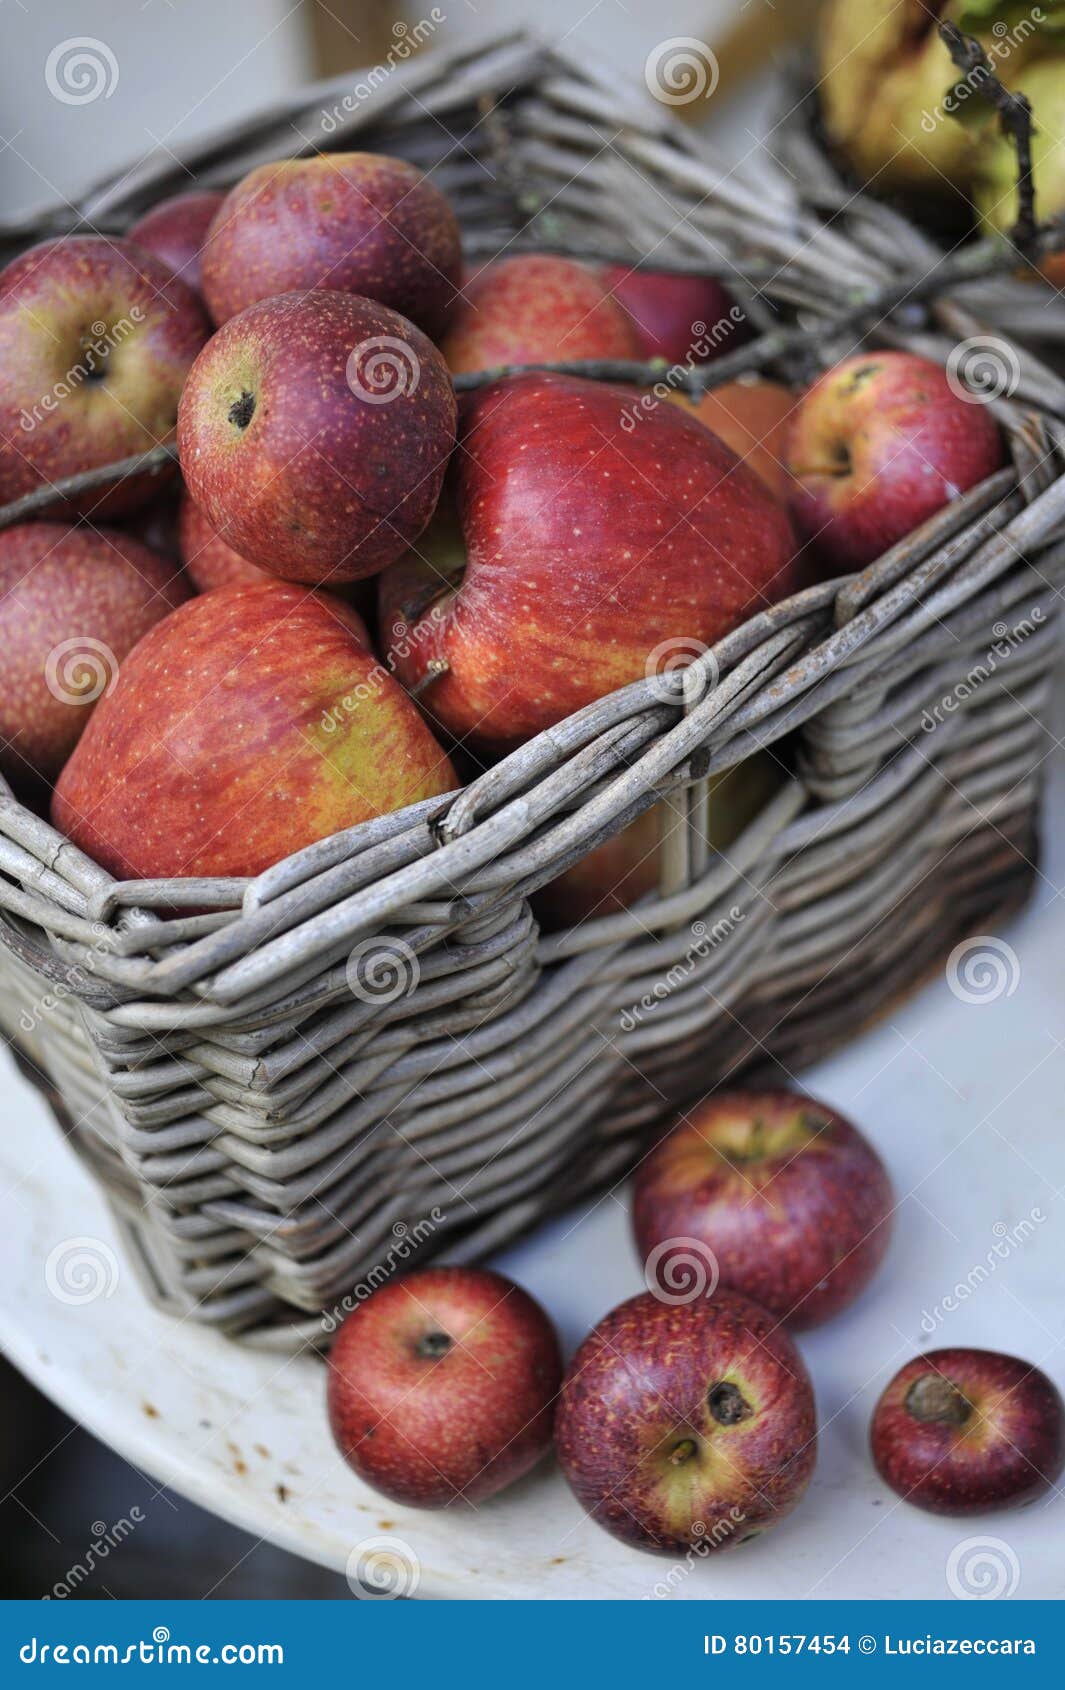 organic red apples